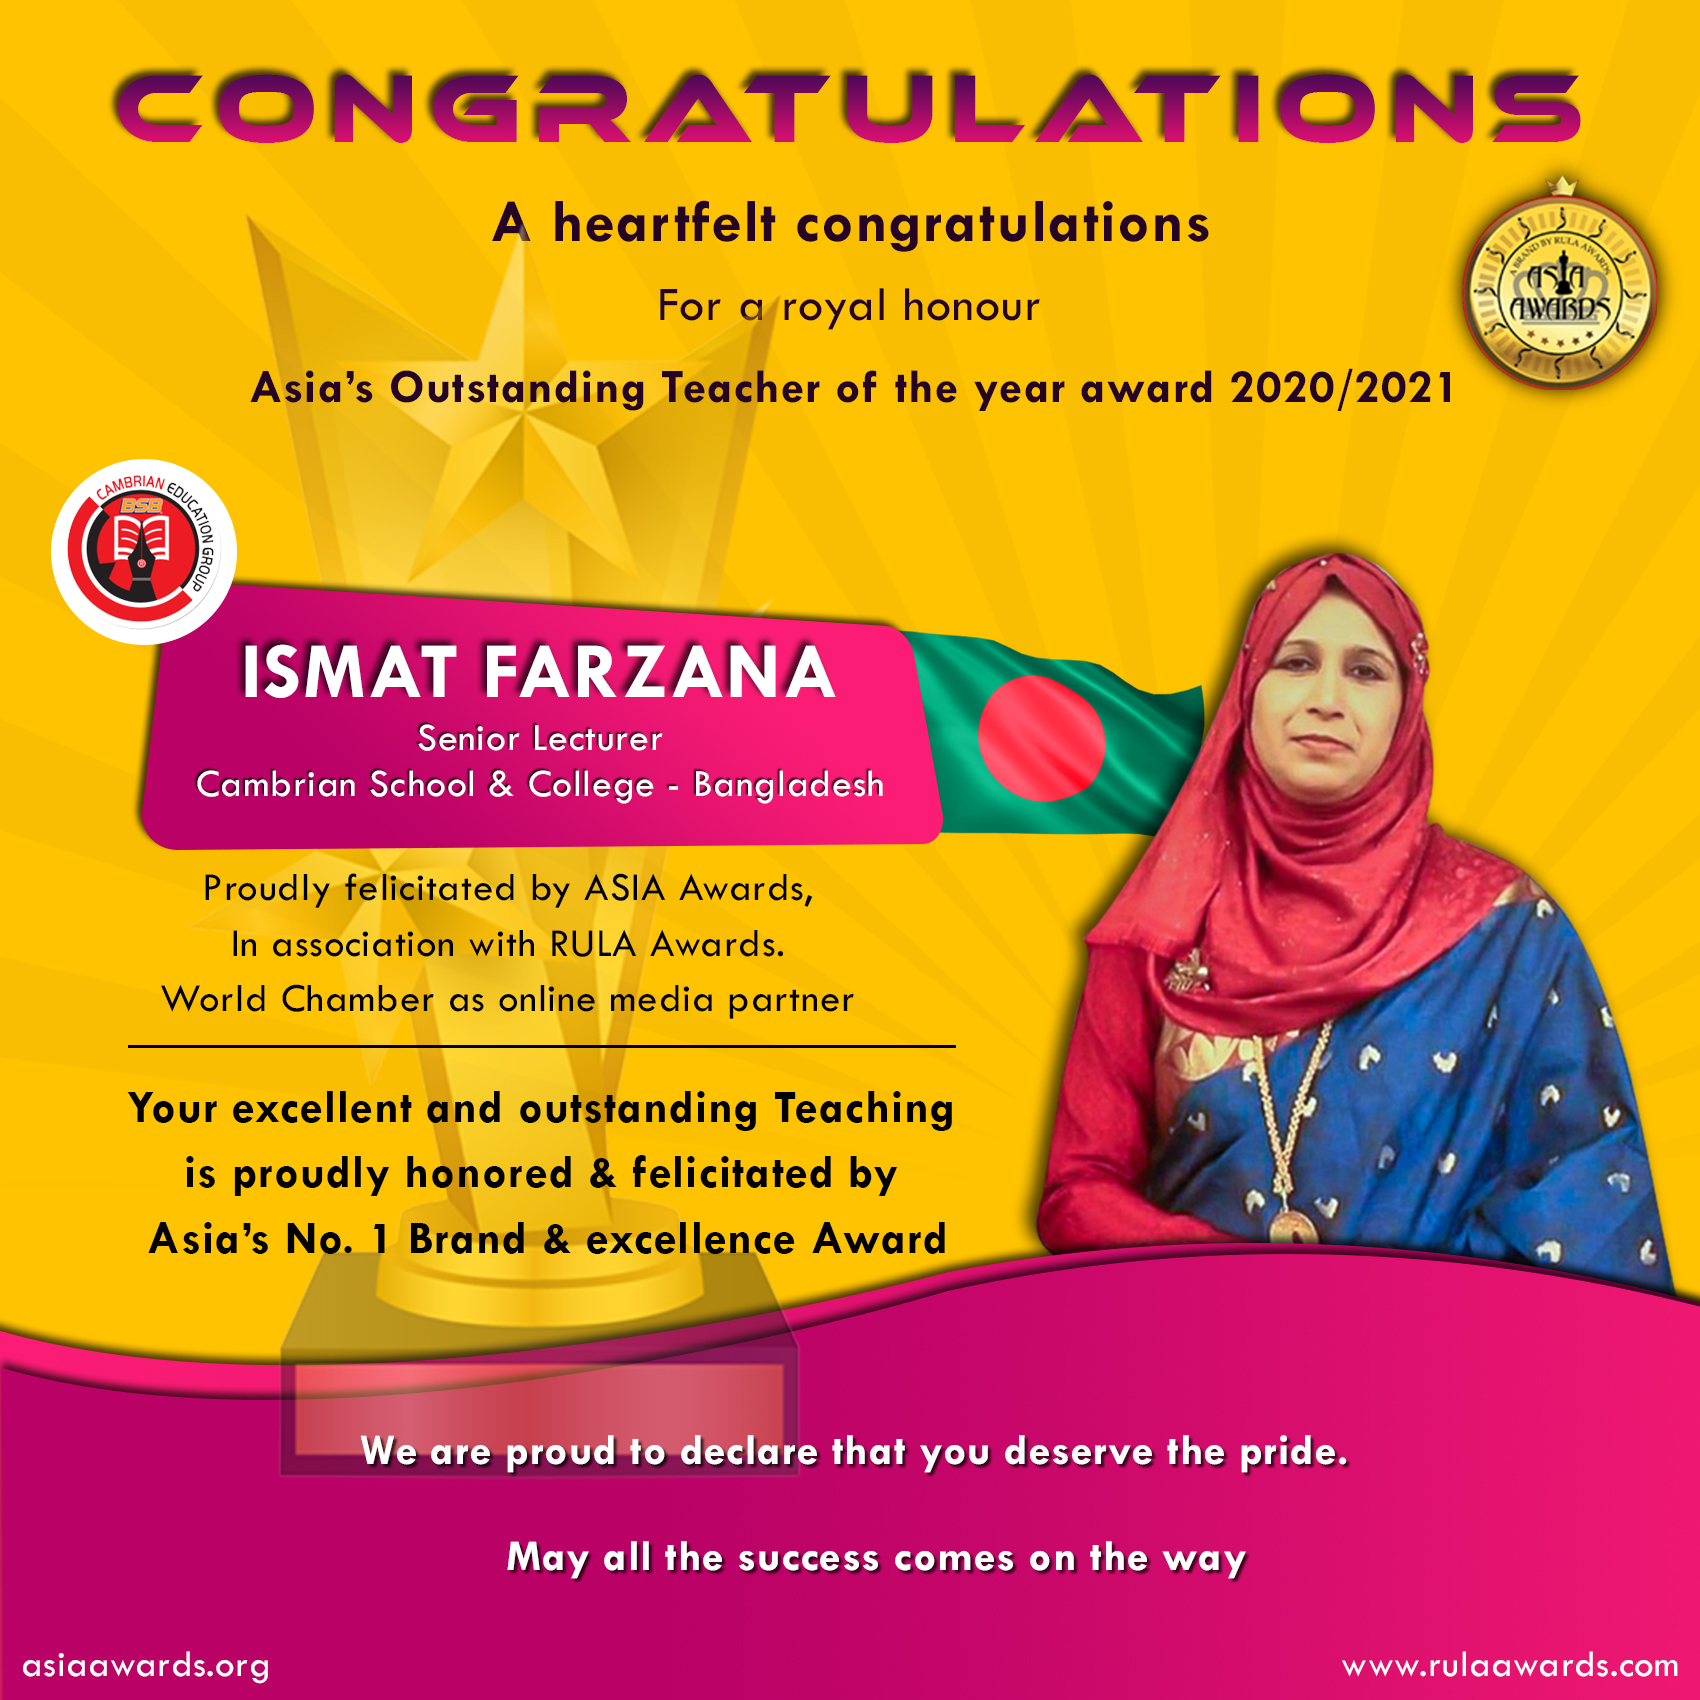 Ismat Farzana has bagged Asia's Outstanding Teacher Award